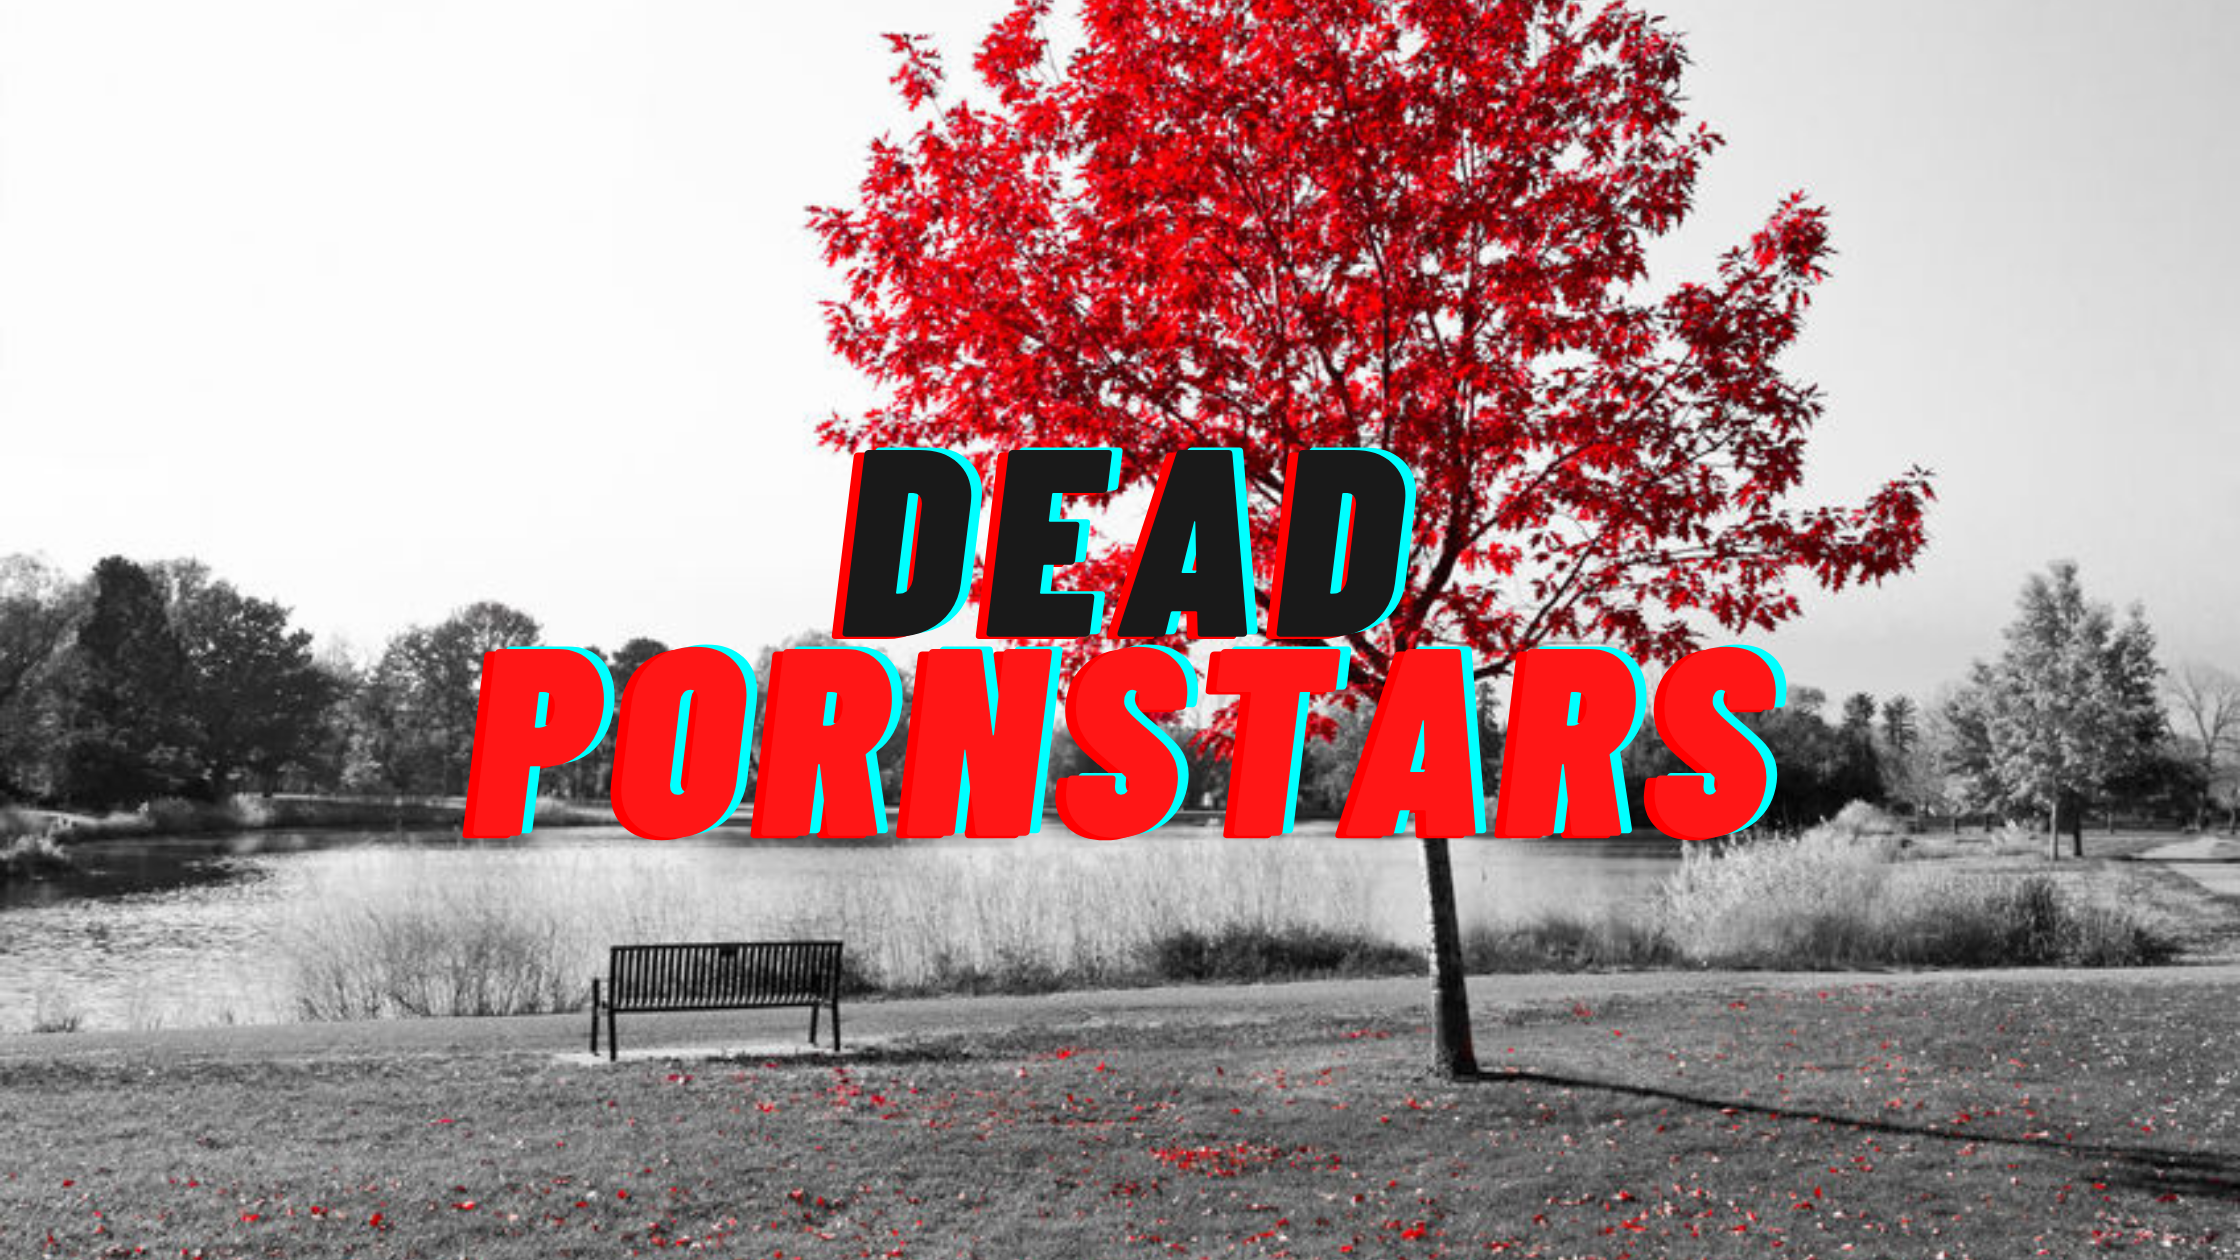 Dead Black Porn Stars